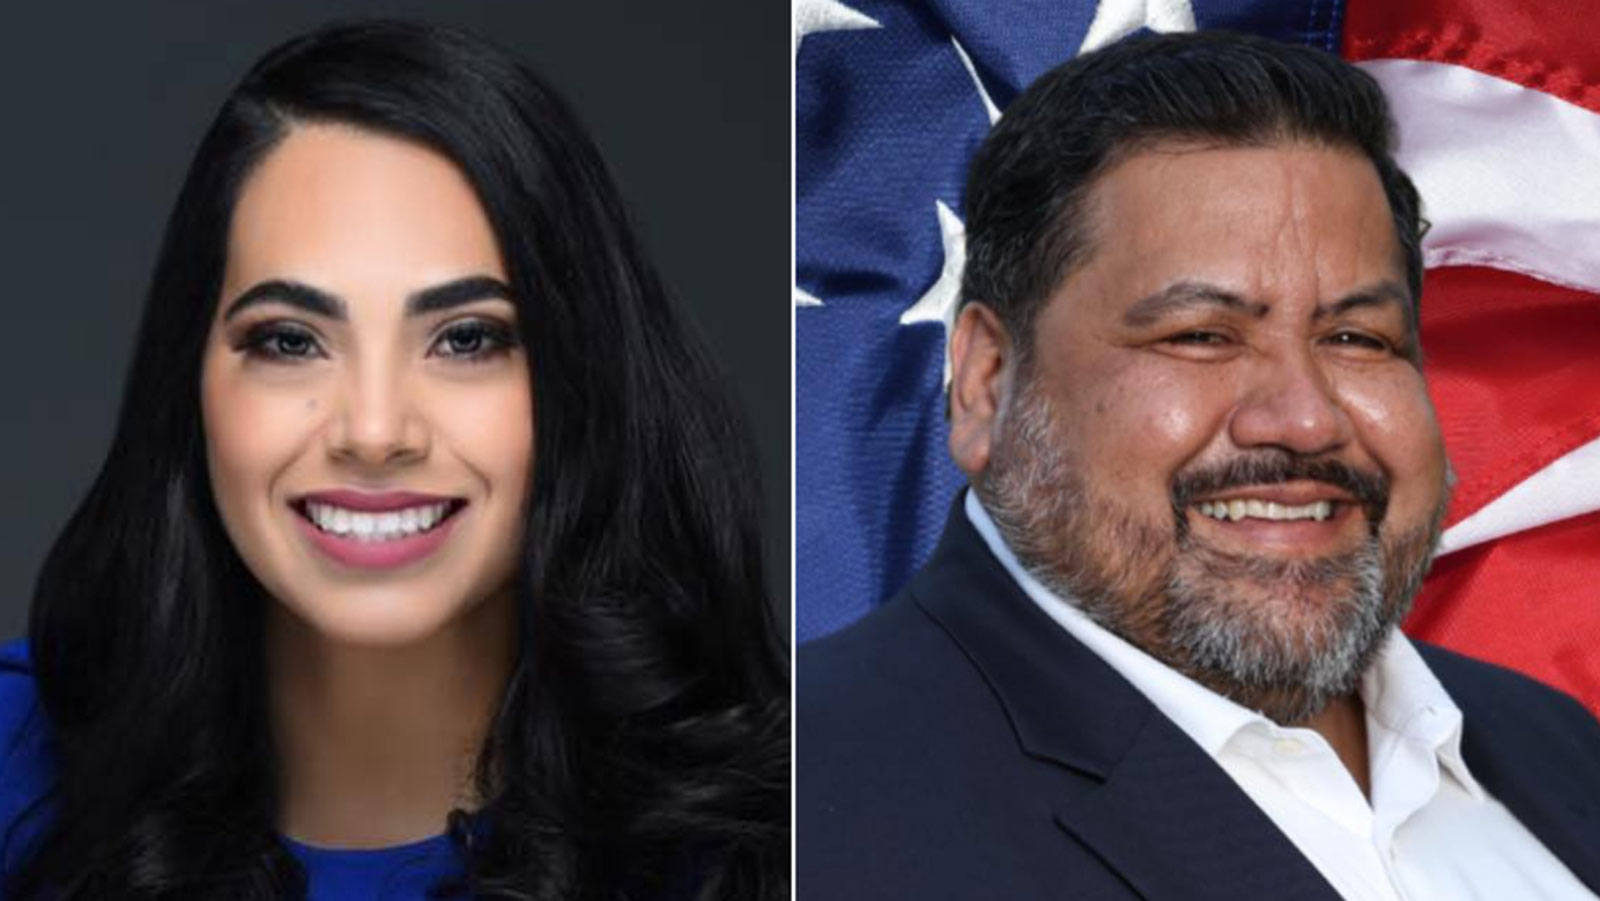 Democrat Dan Sanchez has conceded to Republican Mayra Flores in the special election for Texas' 34th Congressional District.